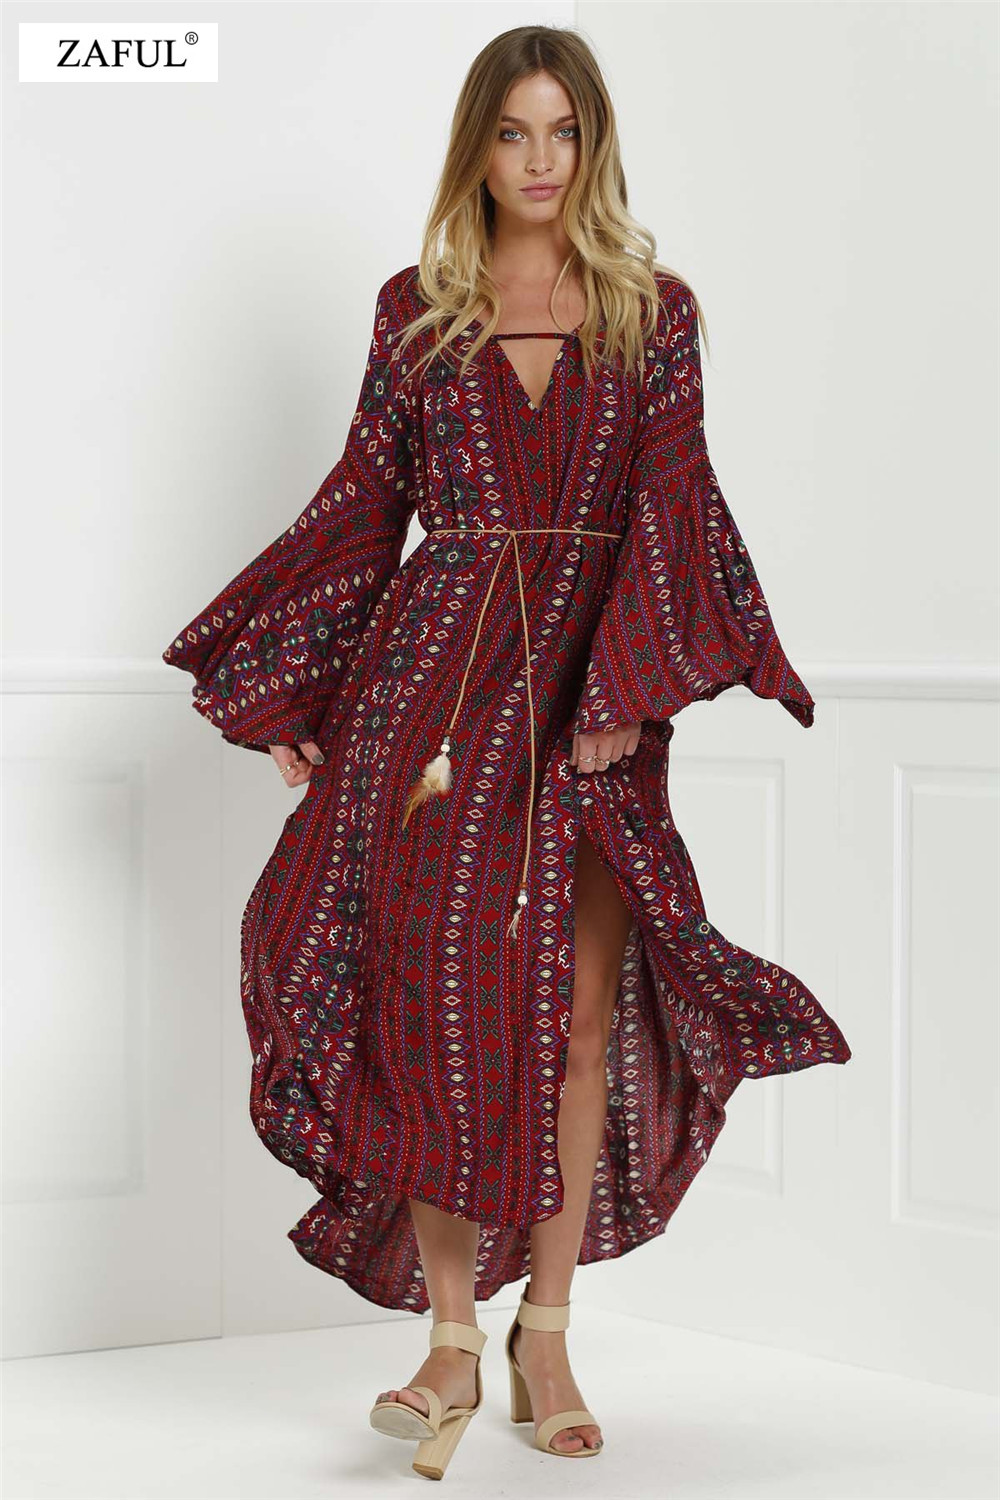 ZAFUL-Brand-New-Spring-Vintage-Robe-Women-Dress-Ethinc-Print-Long-Sleeve-Split-Cotton-dresses-Armhol-32754493287